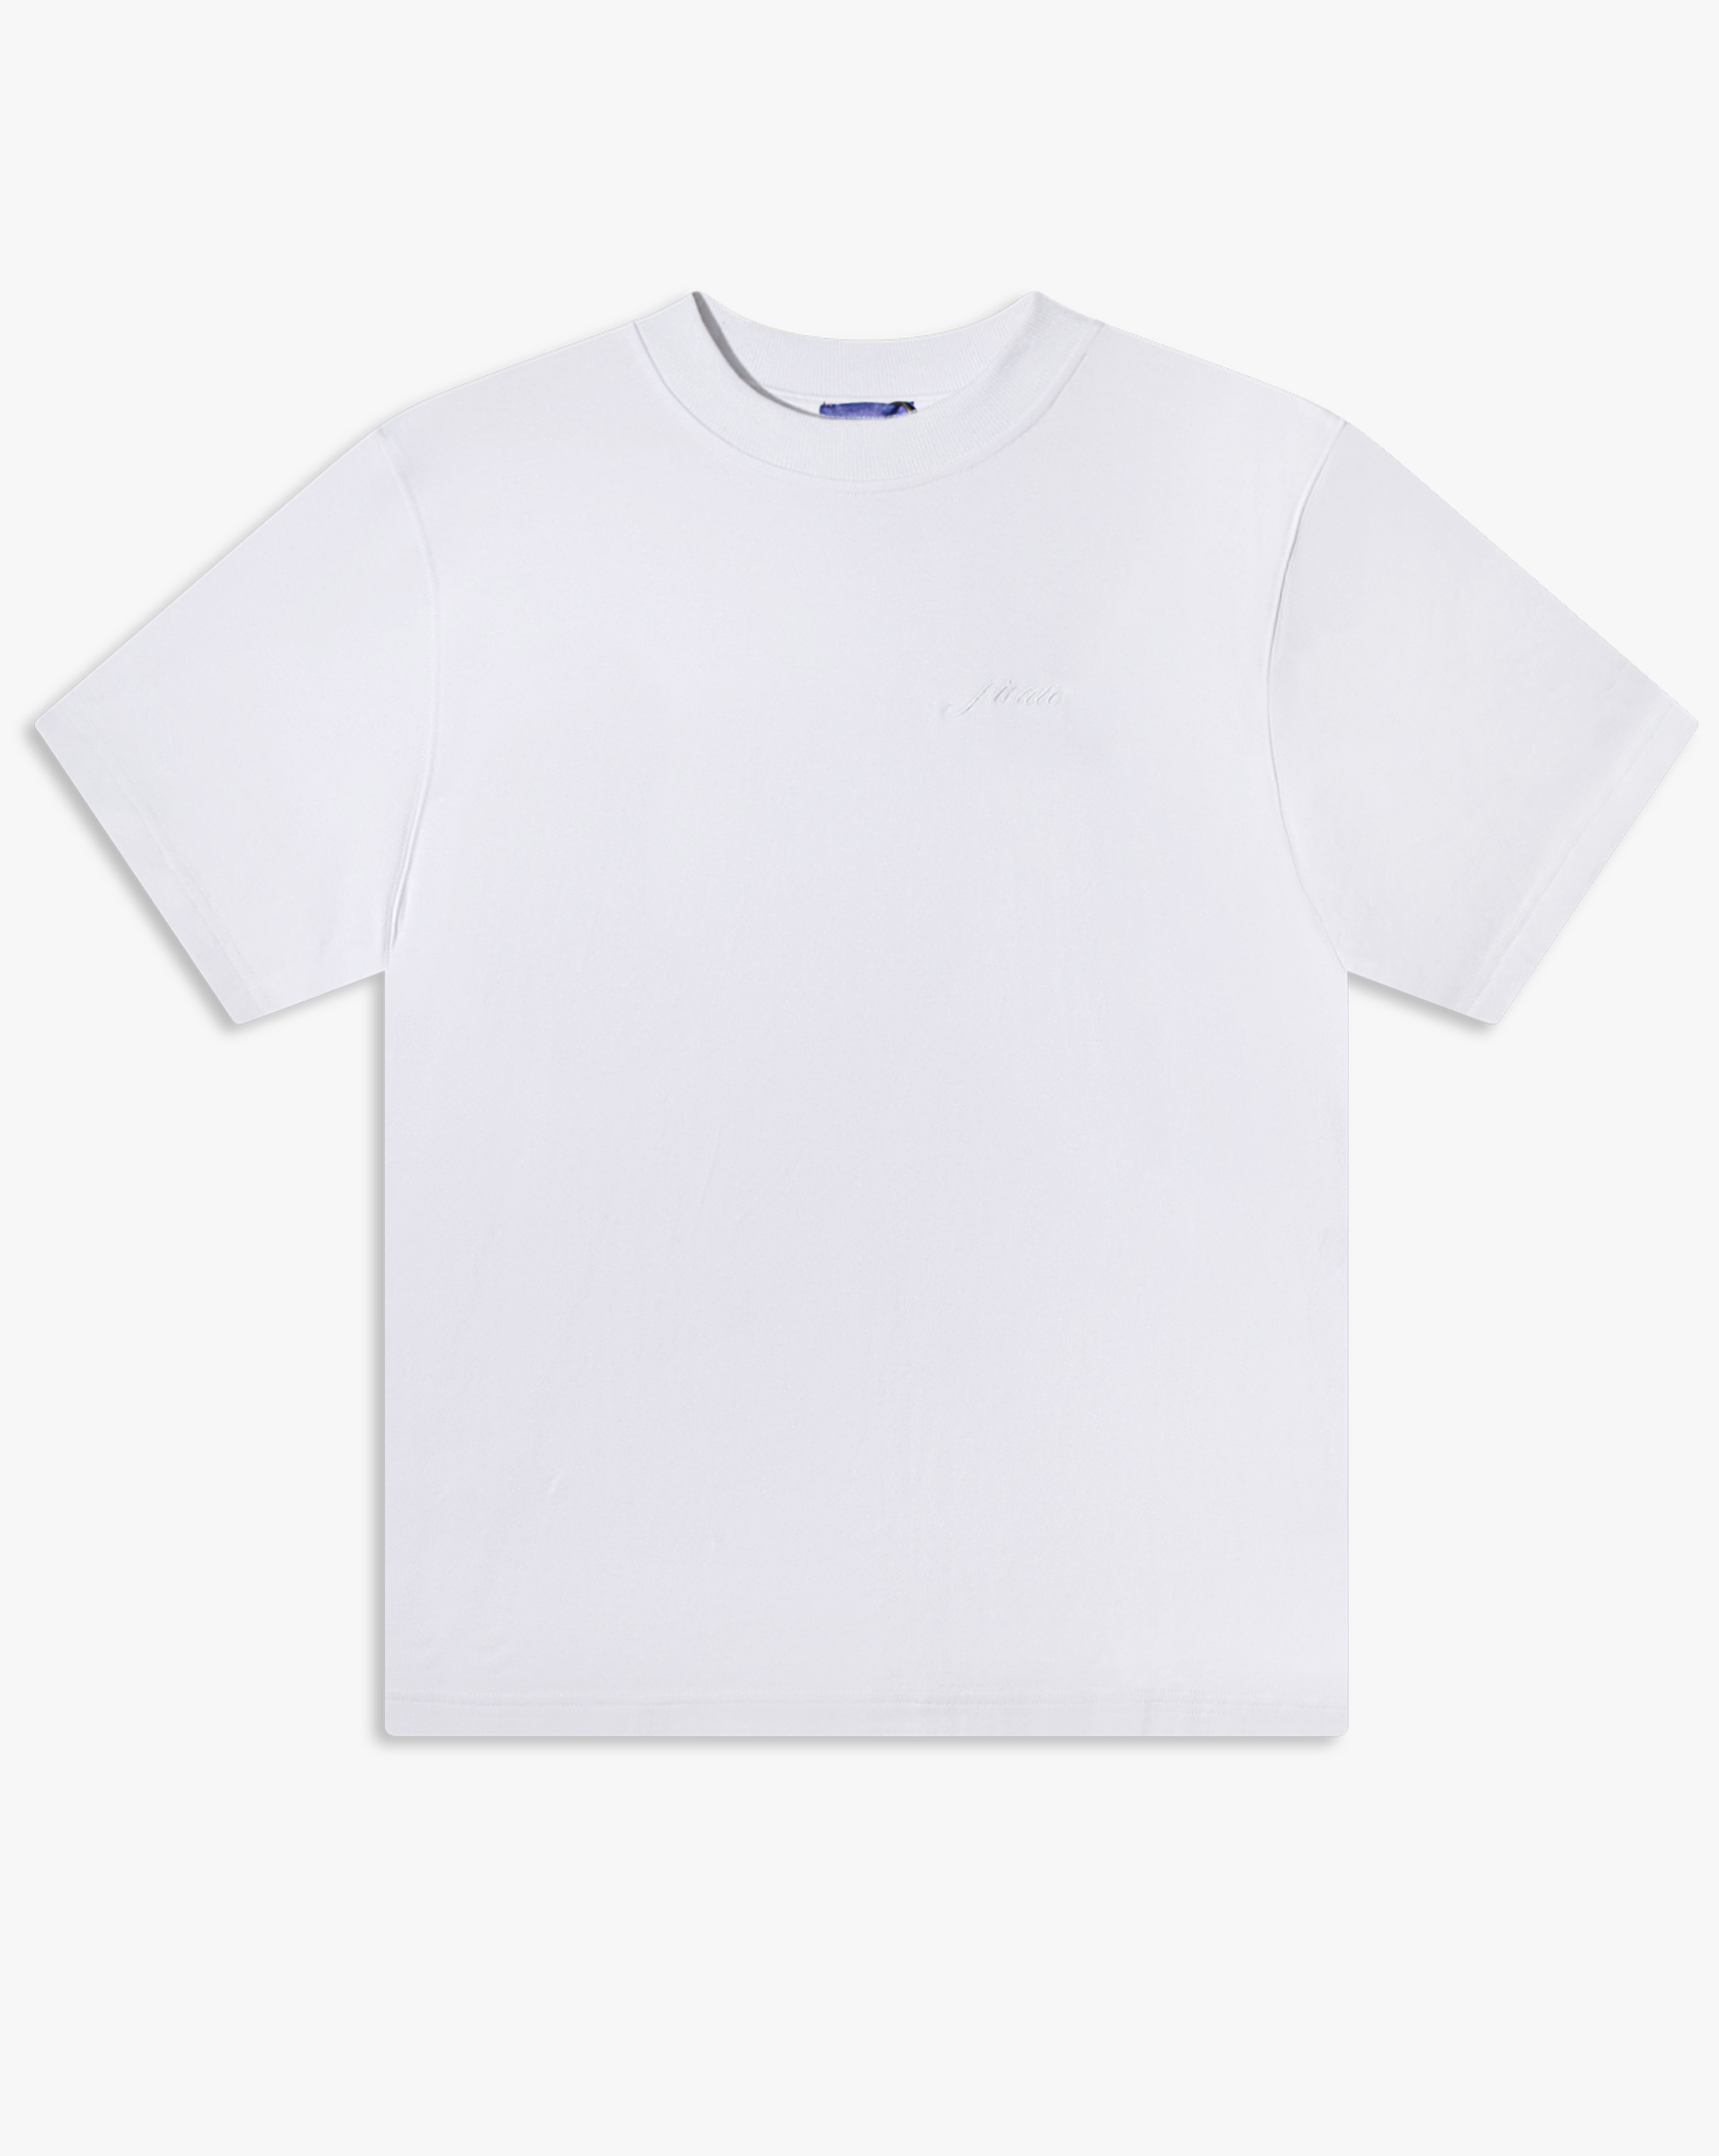 Pirate Hilltop T-Shirt (White)